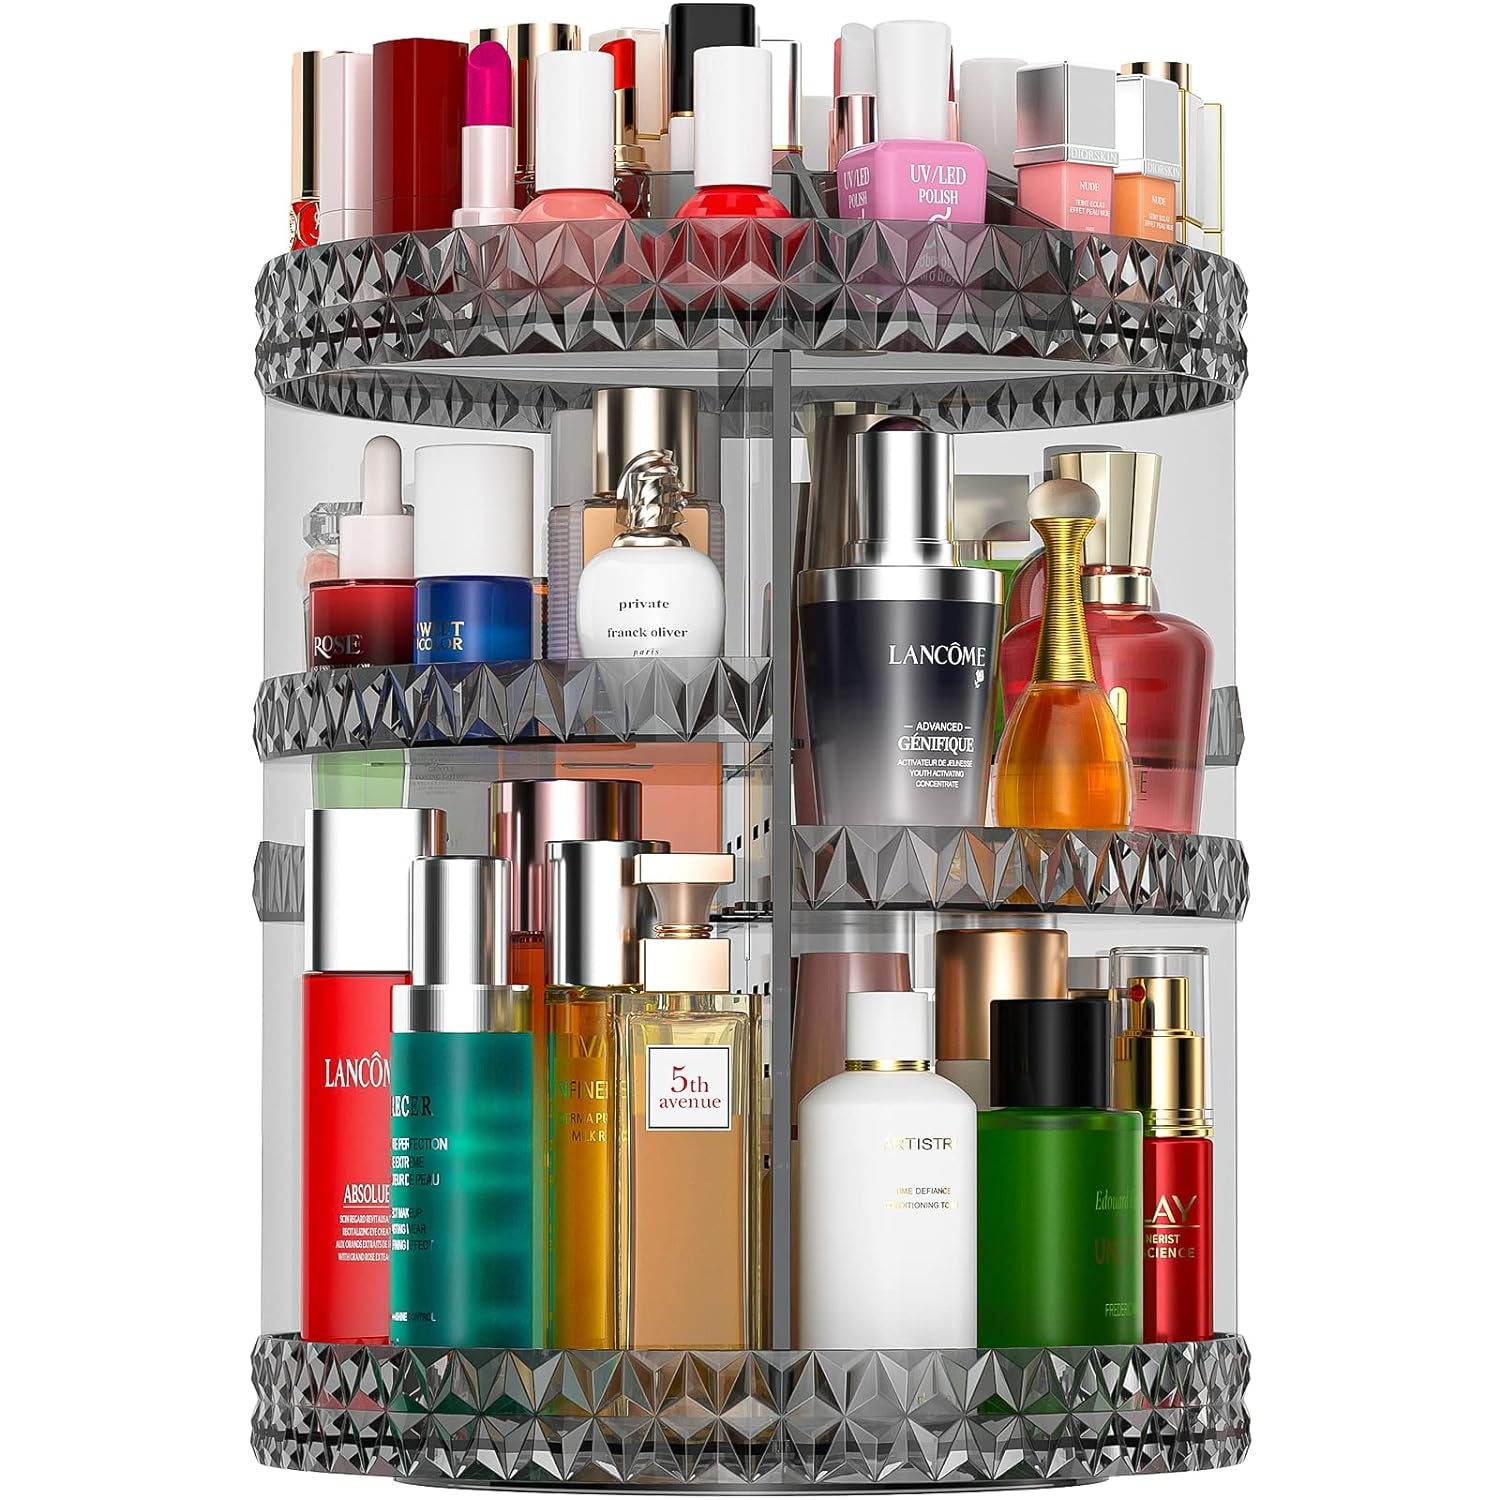 360 Rotating Makeup Organizer, Spinning Bathroom Organizer Countertop, 6 Layers Large Capacity Cosmetic Organizer, Fits Makeup Brushes, Lipsticks, Bathroom, Vanity, Acrylic Gray